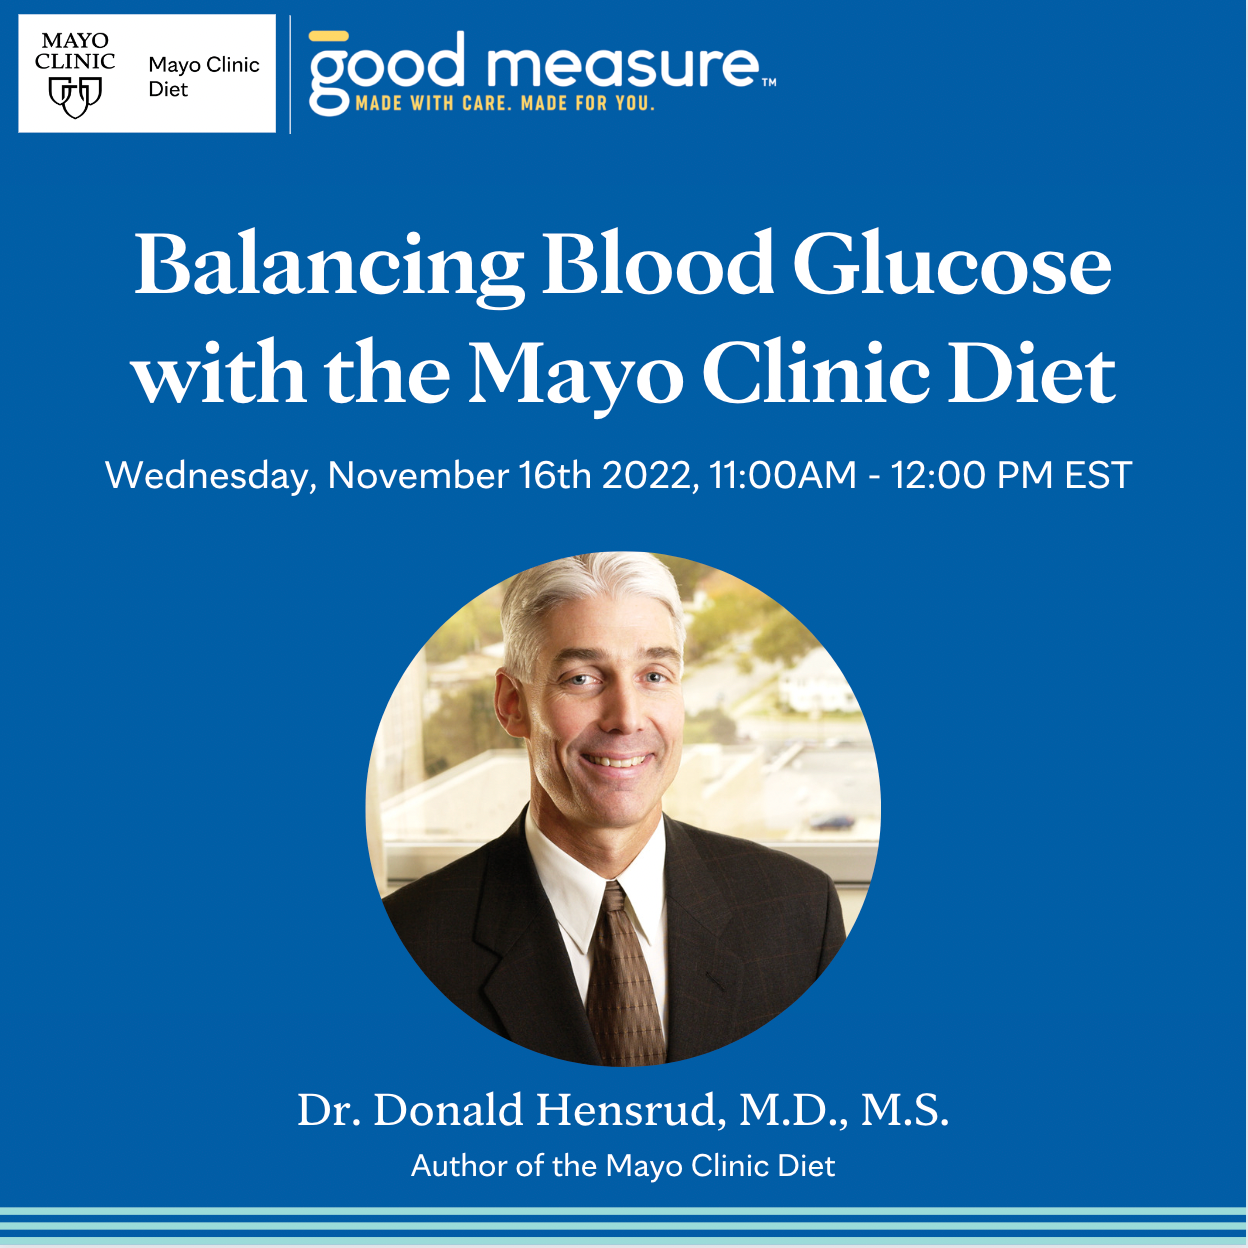 Upcoming Webinar on Balancing Blood Glucose